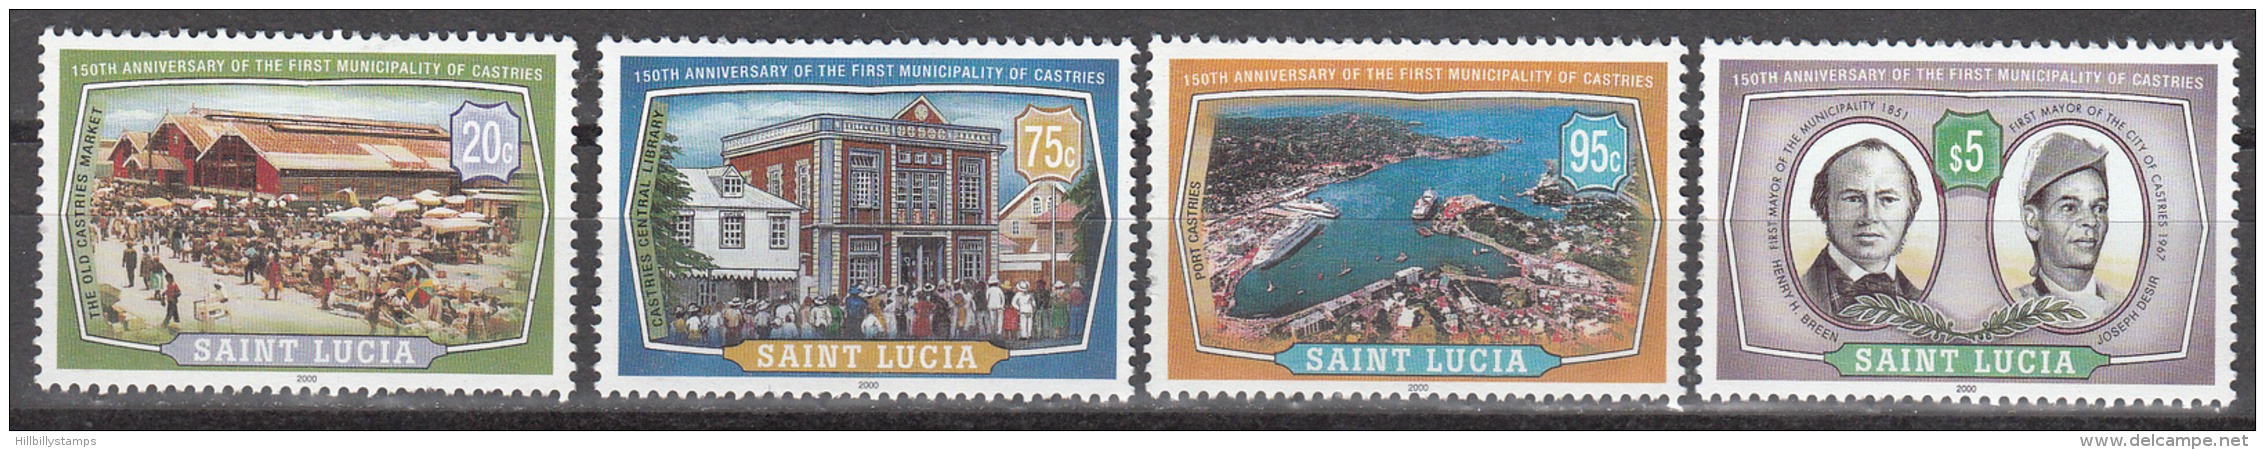 St Lucia    Scott No.  1121-24    Mnh   Year  2000 - St.Lucia (...-1978)